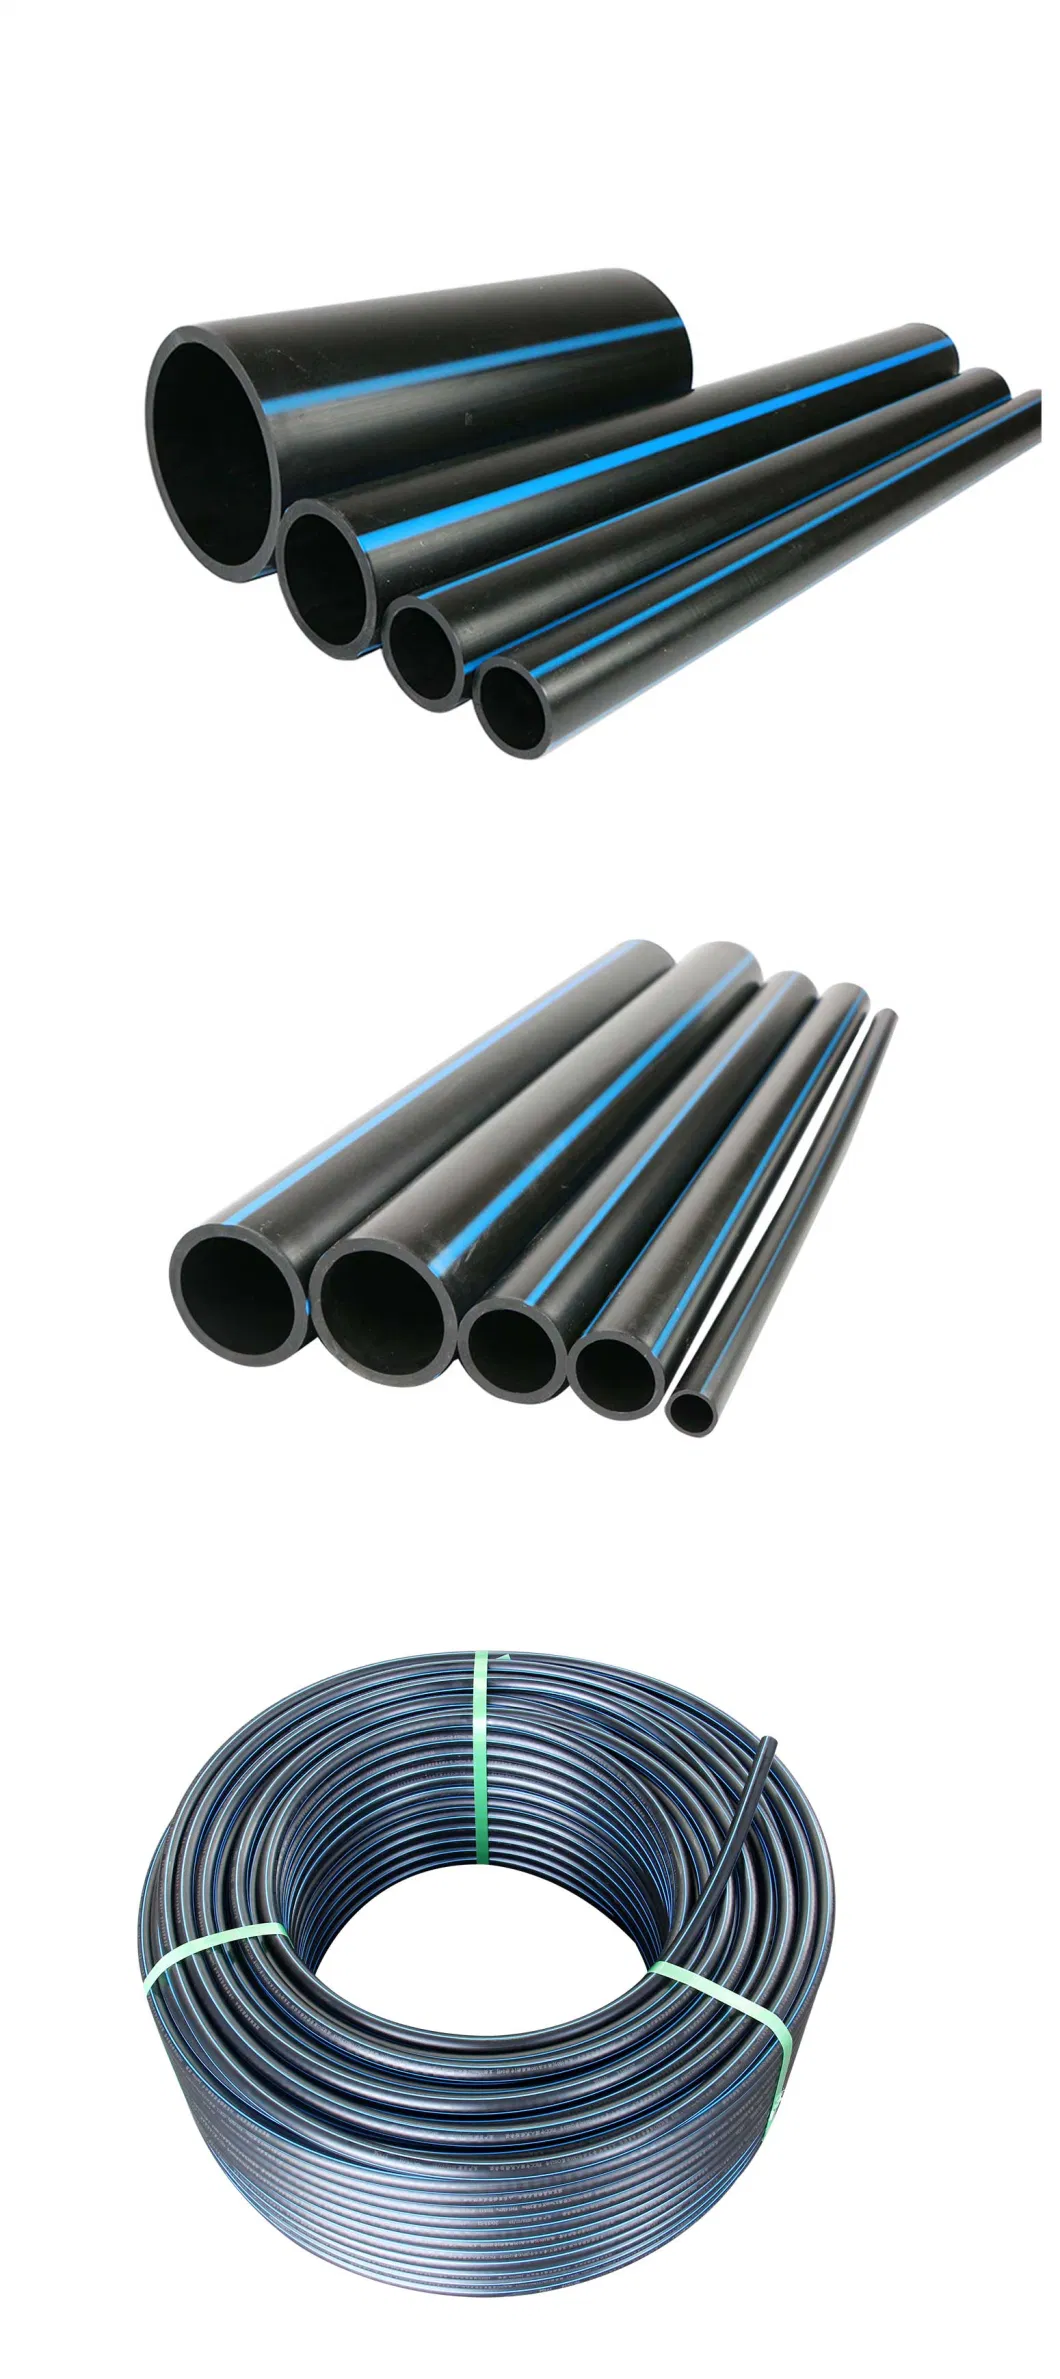 HDPE Pipe High Density Polyethylene Pipe Plastic Tube Plastic Tube PE Pipe for Water Mining Slurry